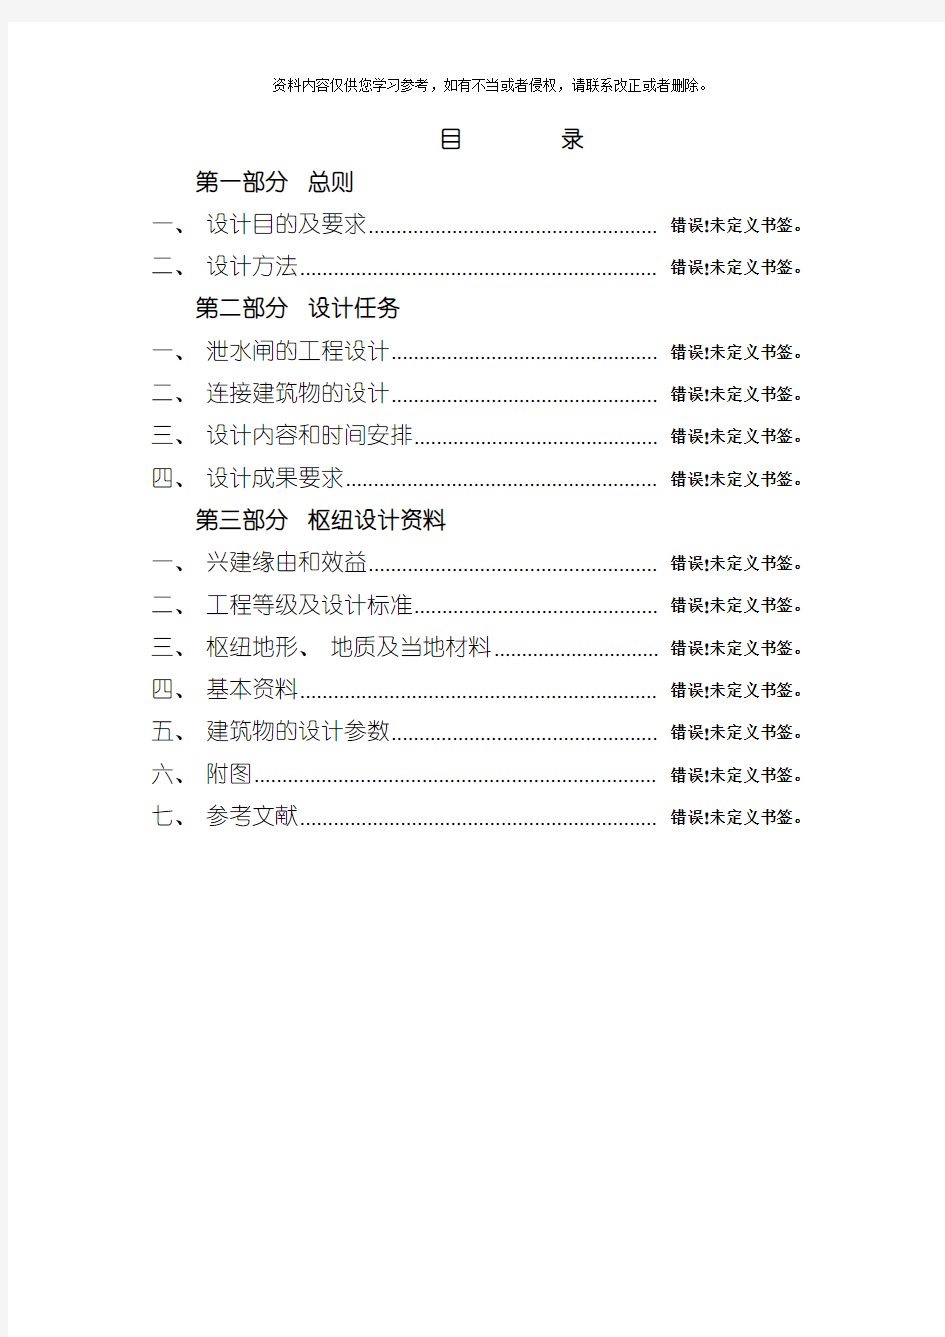 H江水利枢纽工程毕业设计任务书模板